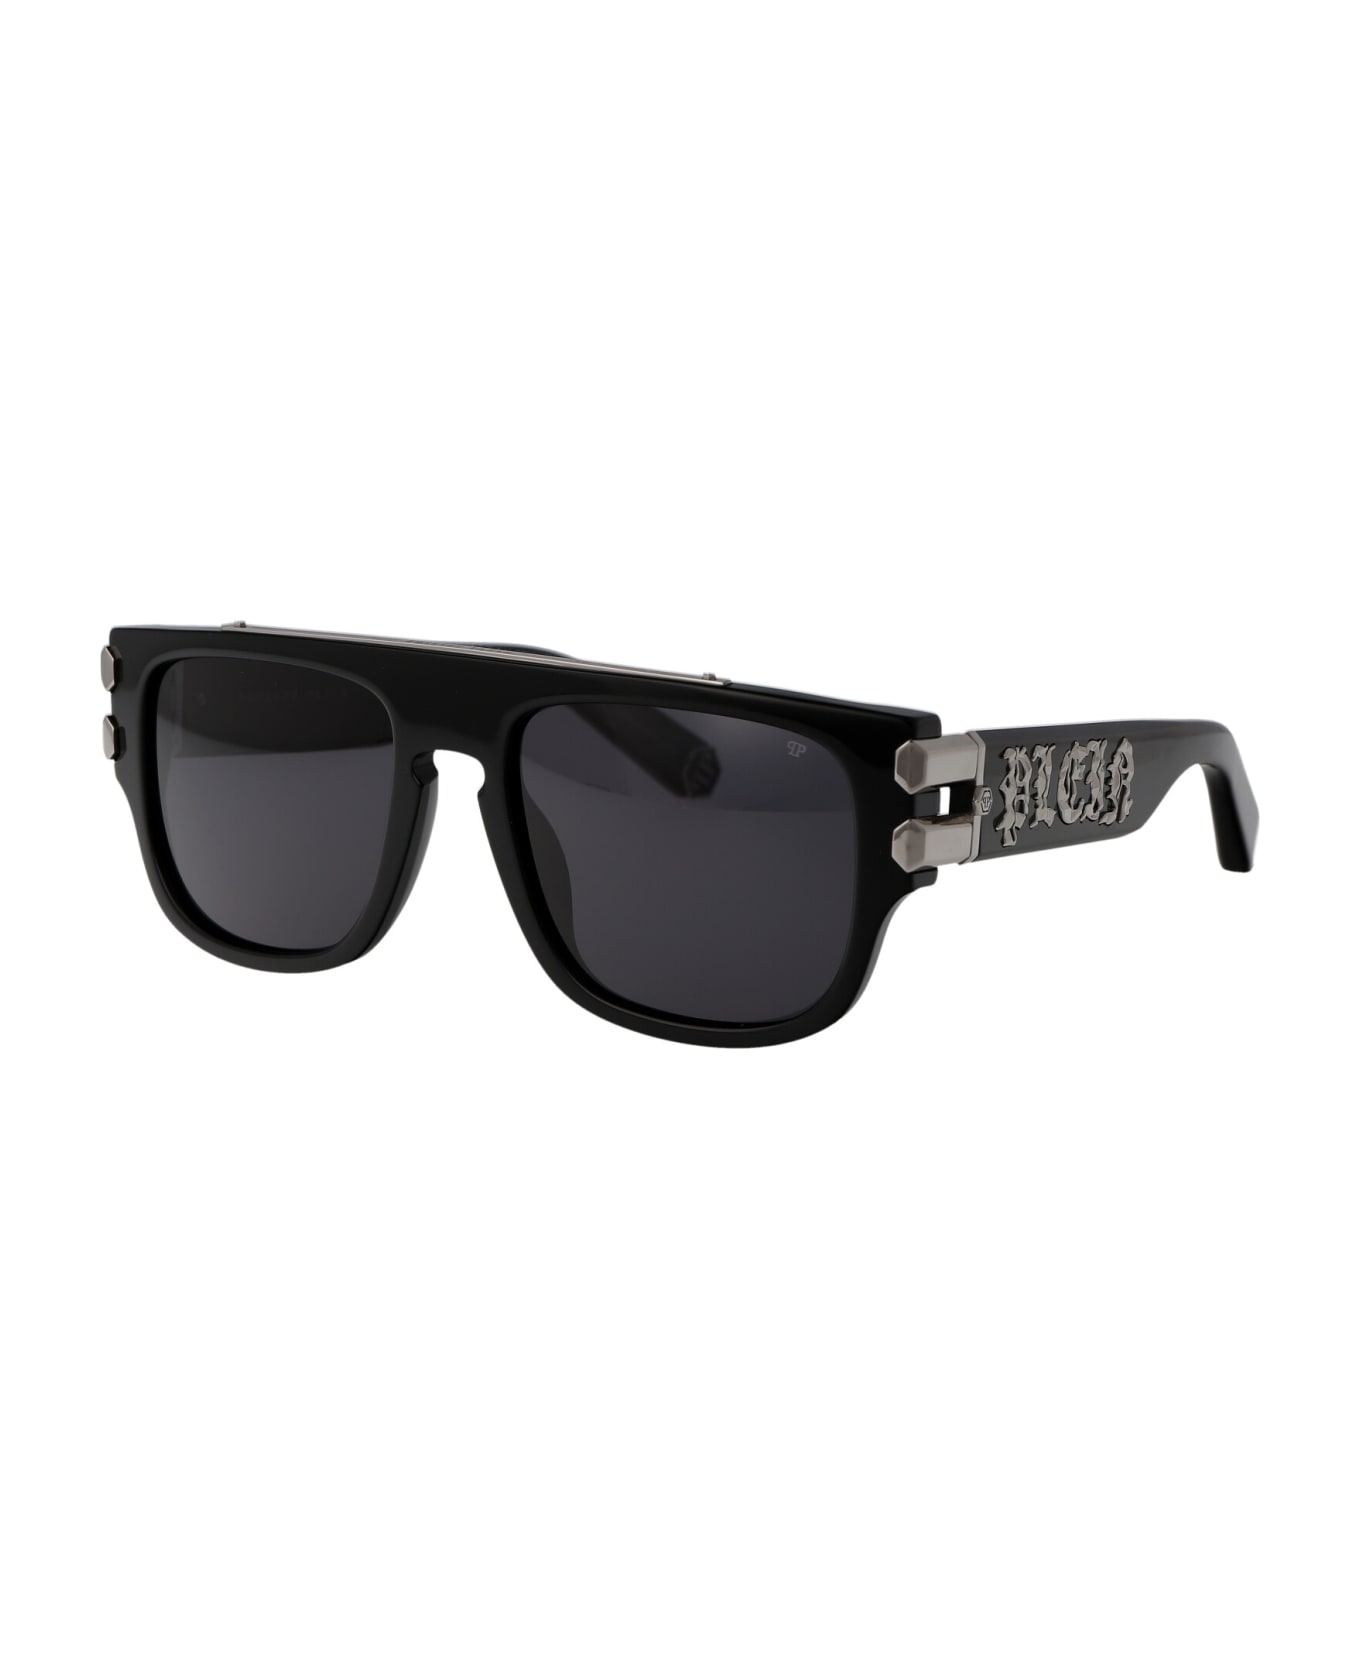 Philipp Plein Spp011x Sunglasses - 0700 BLACK